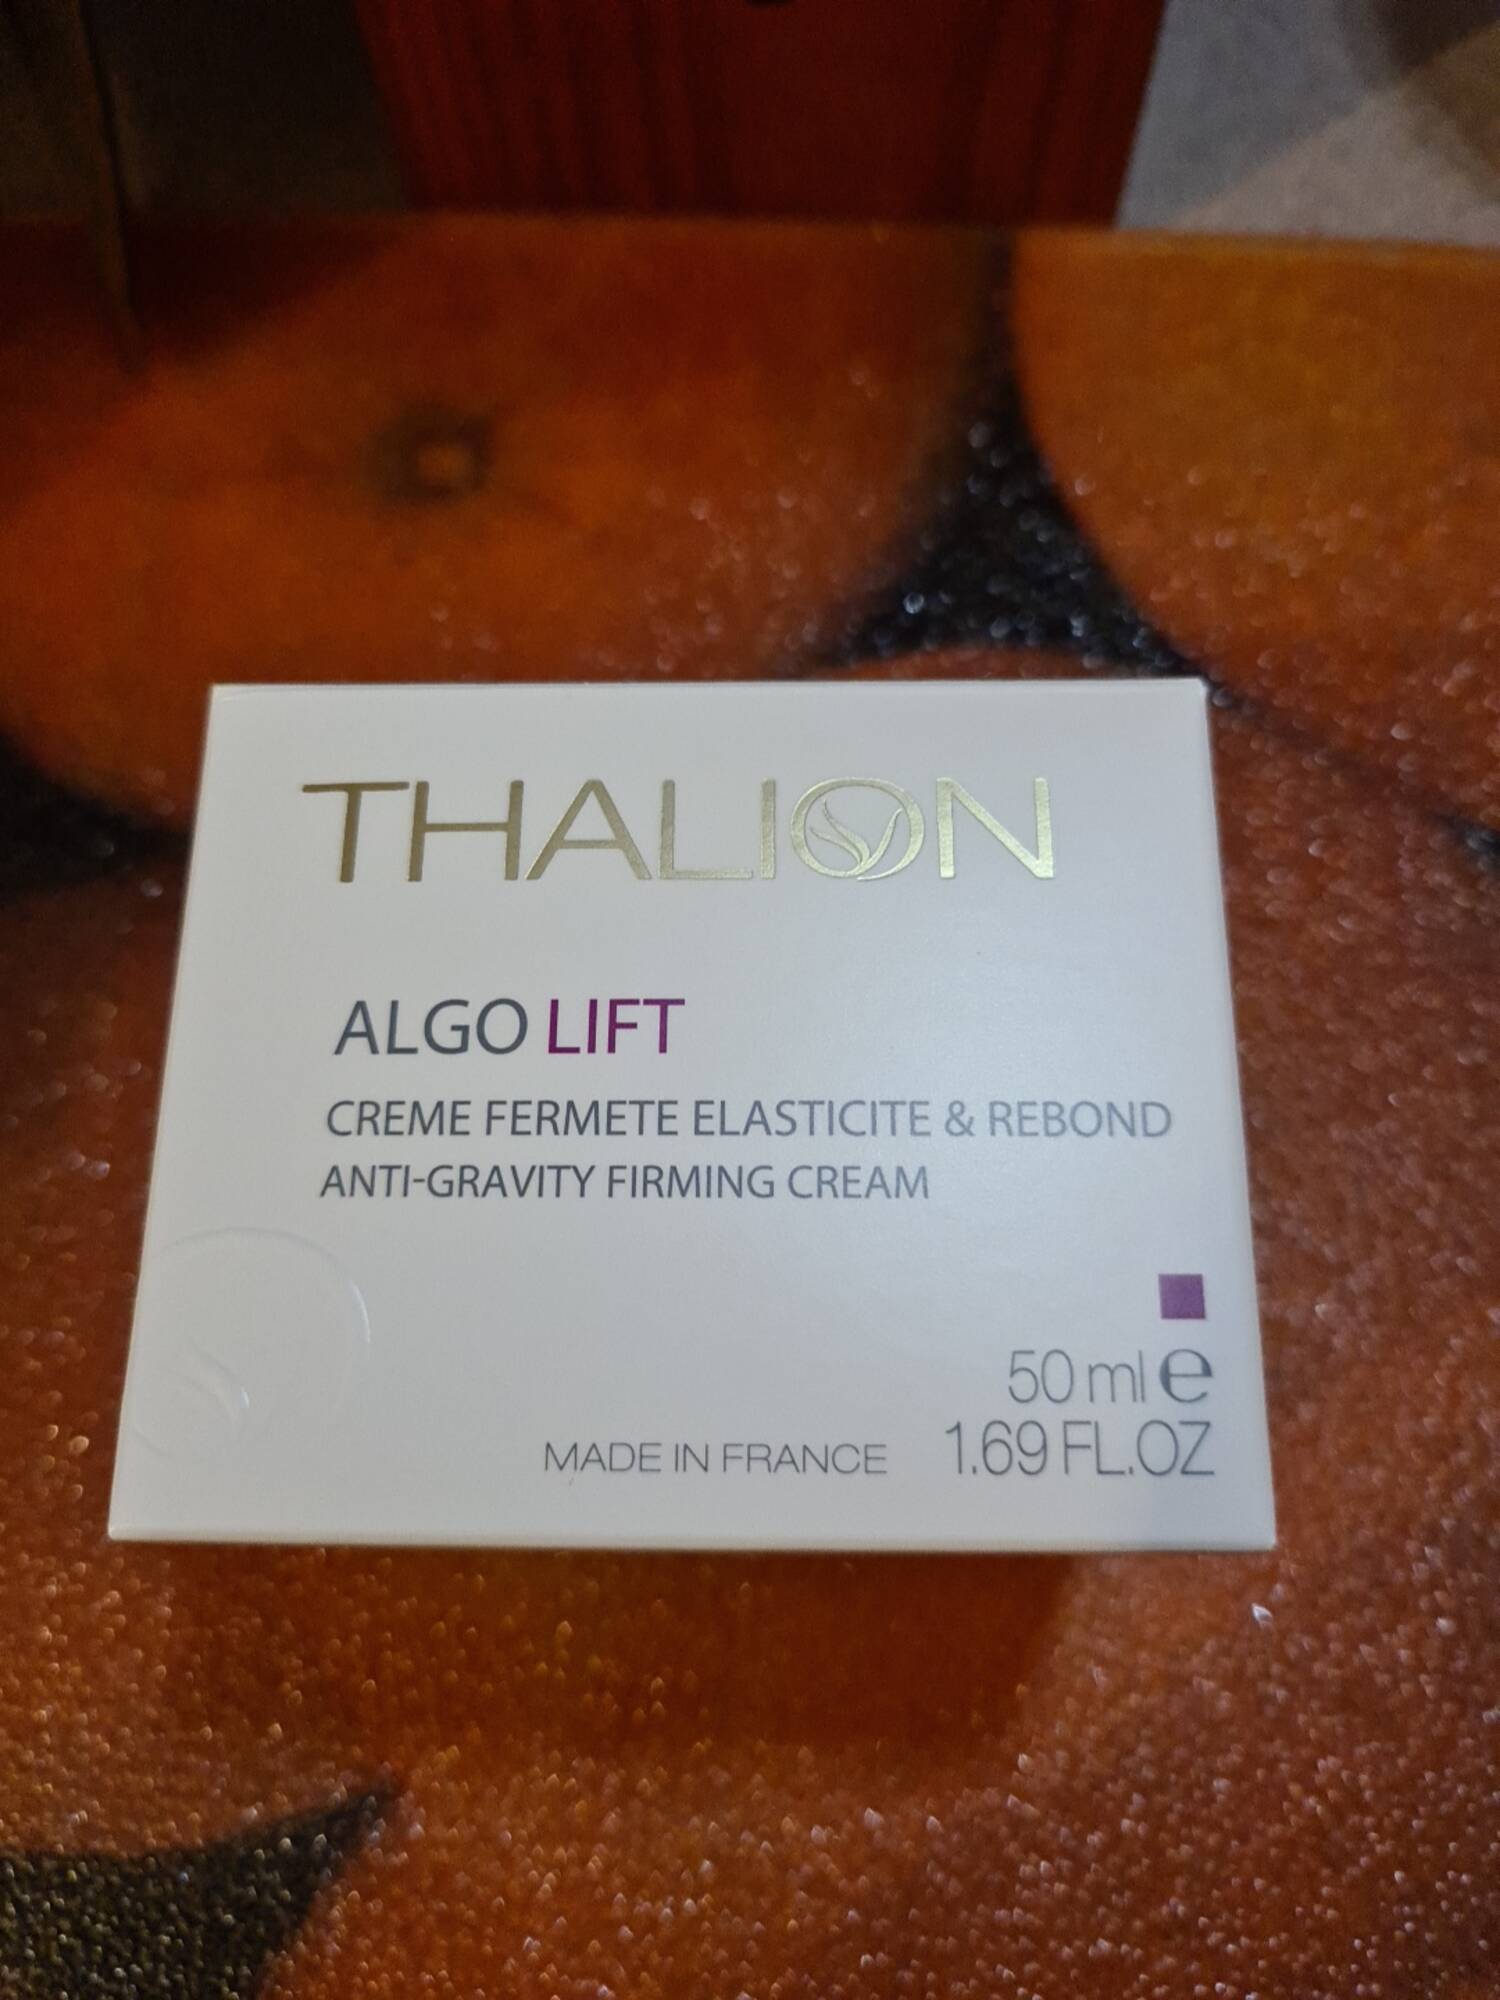 THALION - Algo lift - Creme fermete elasticite & rebond